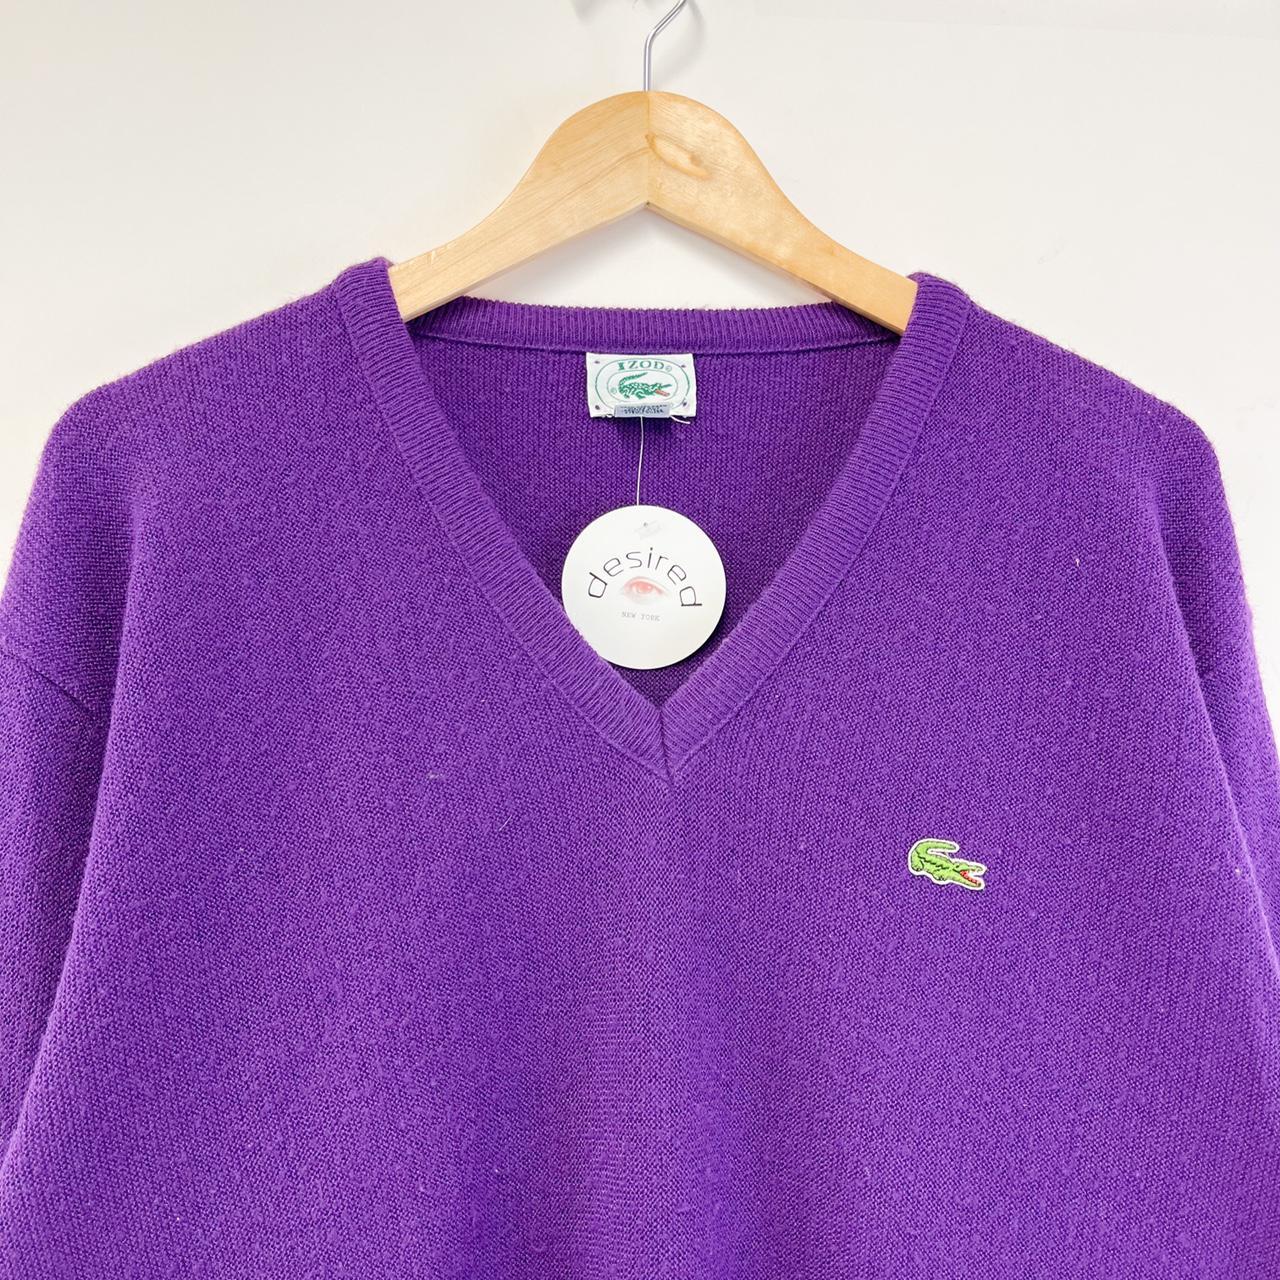 vintage 90s lacoste purple sweater made in... - Depop